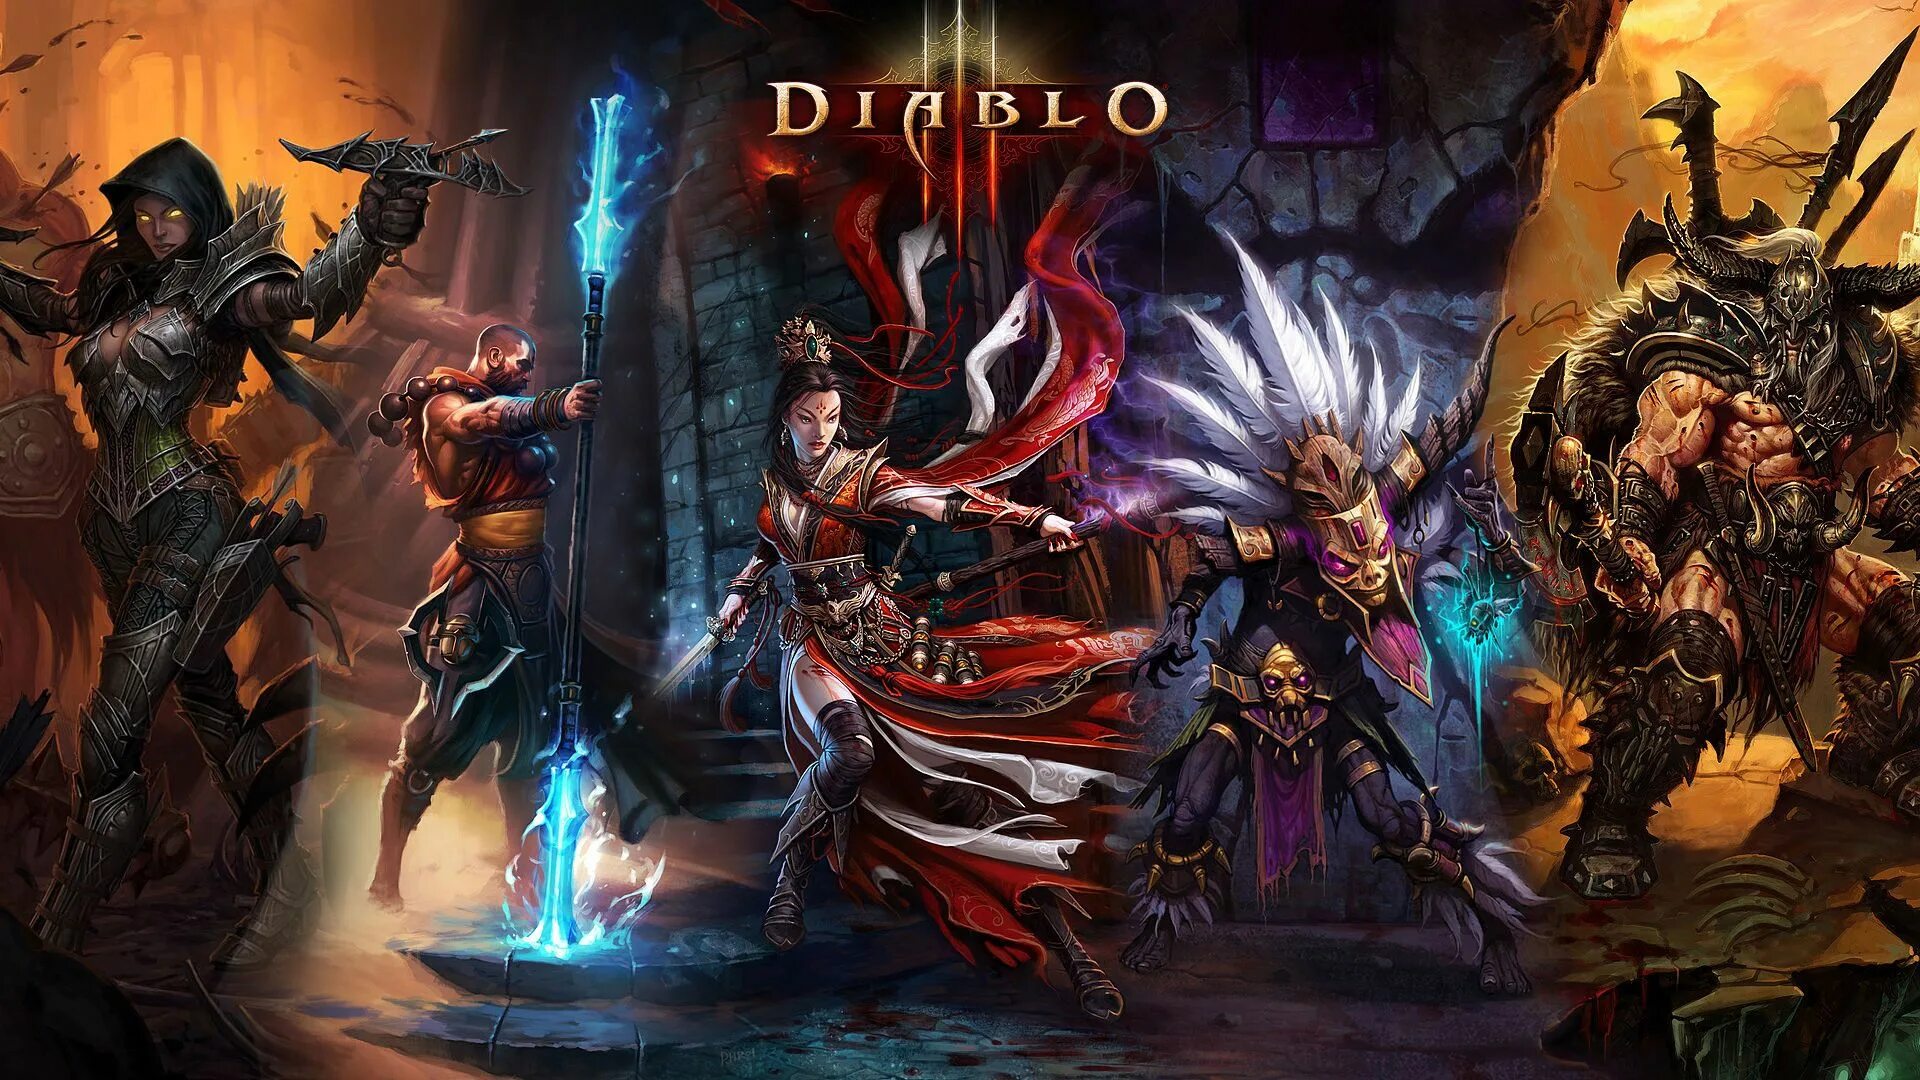 Diablo (игра). Diablo 3. Игра диабло 3. Diablo III: Reaper of Souls. Game diablo играть